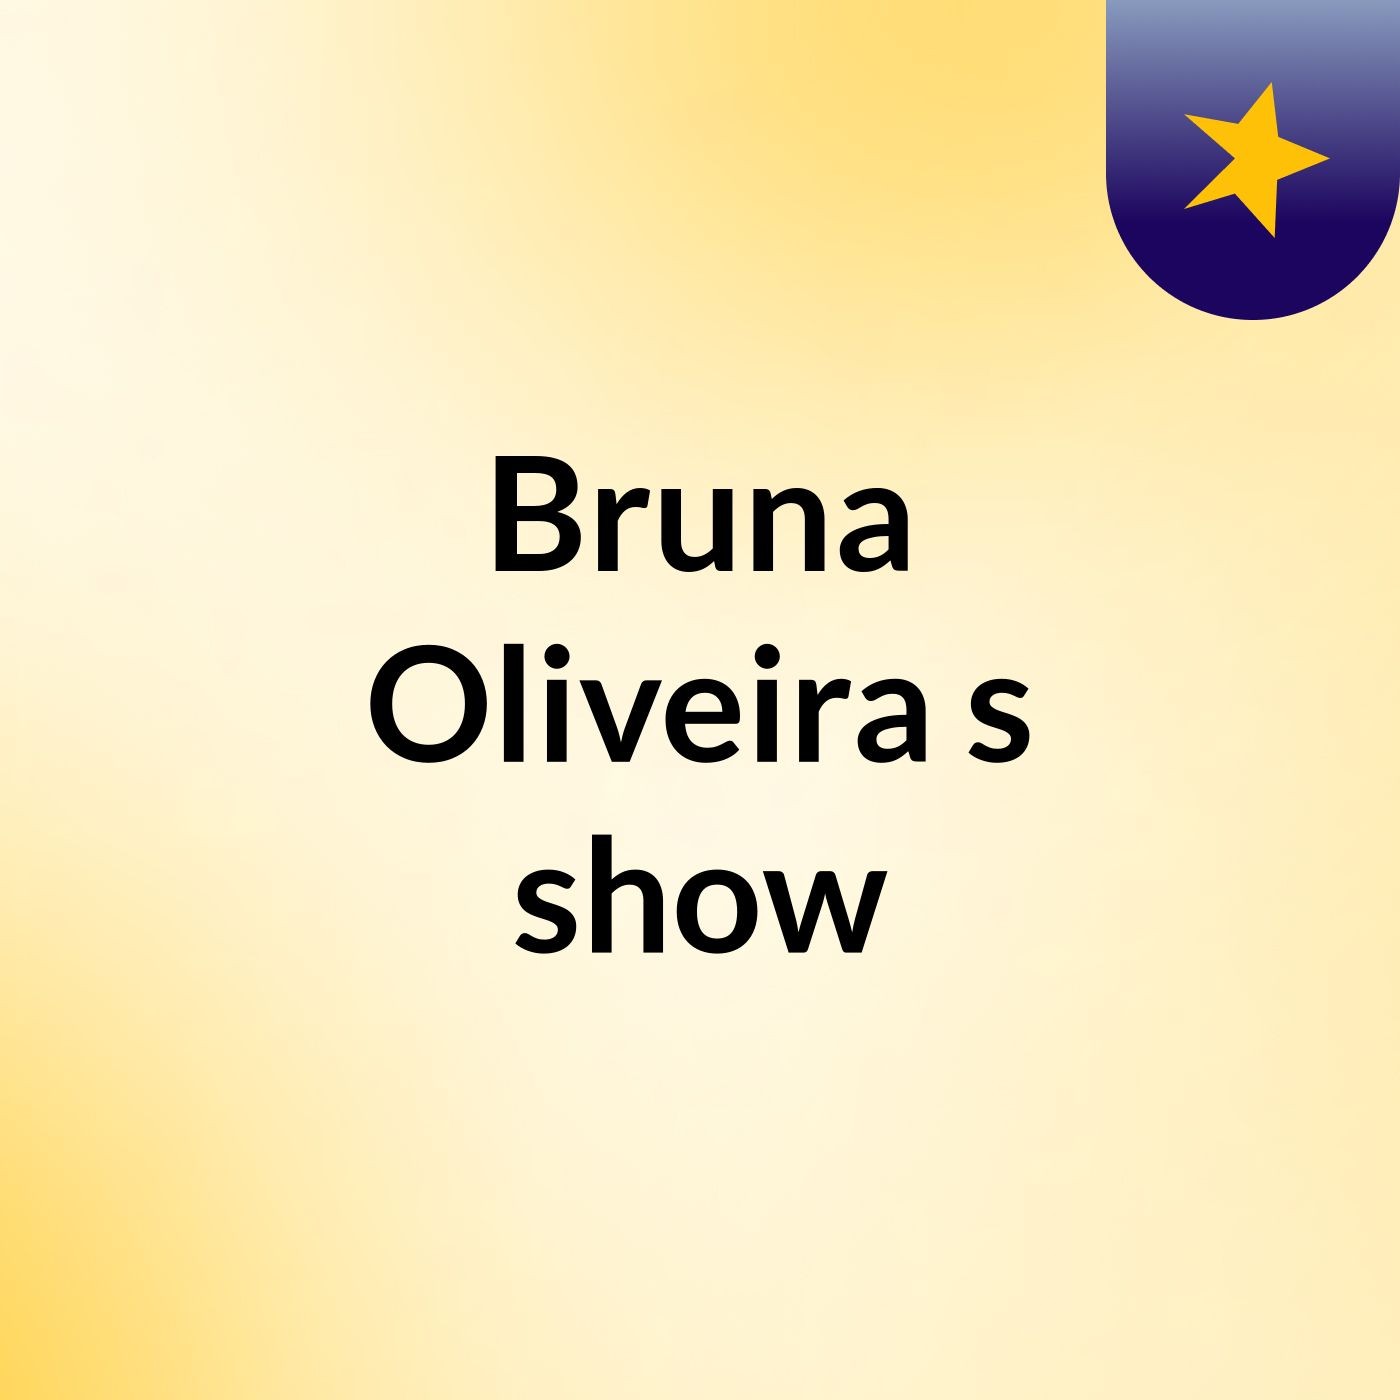 Bruna Oliveira's show